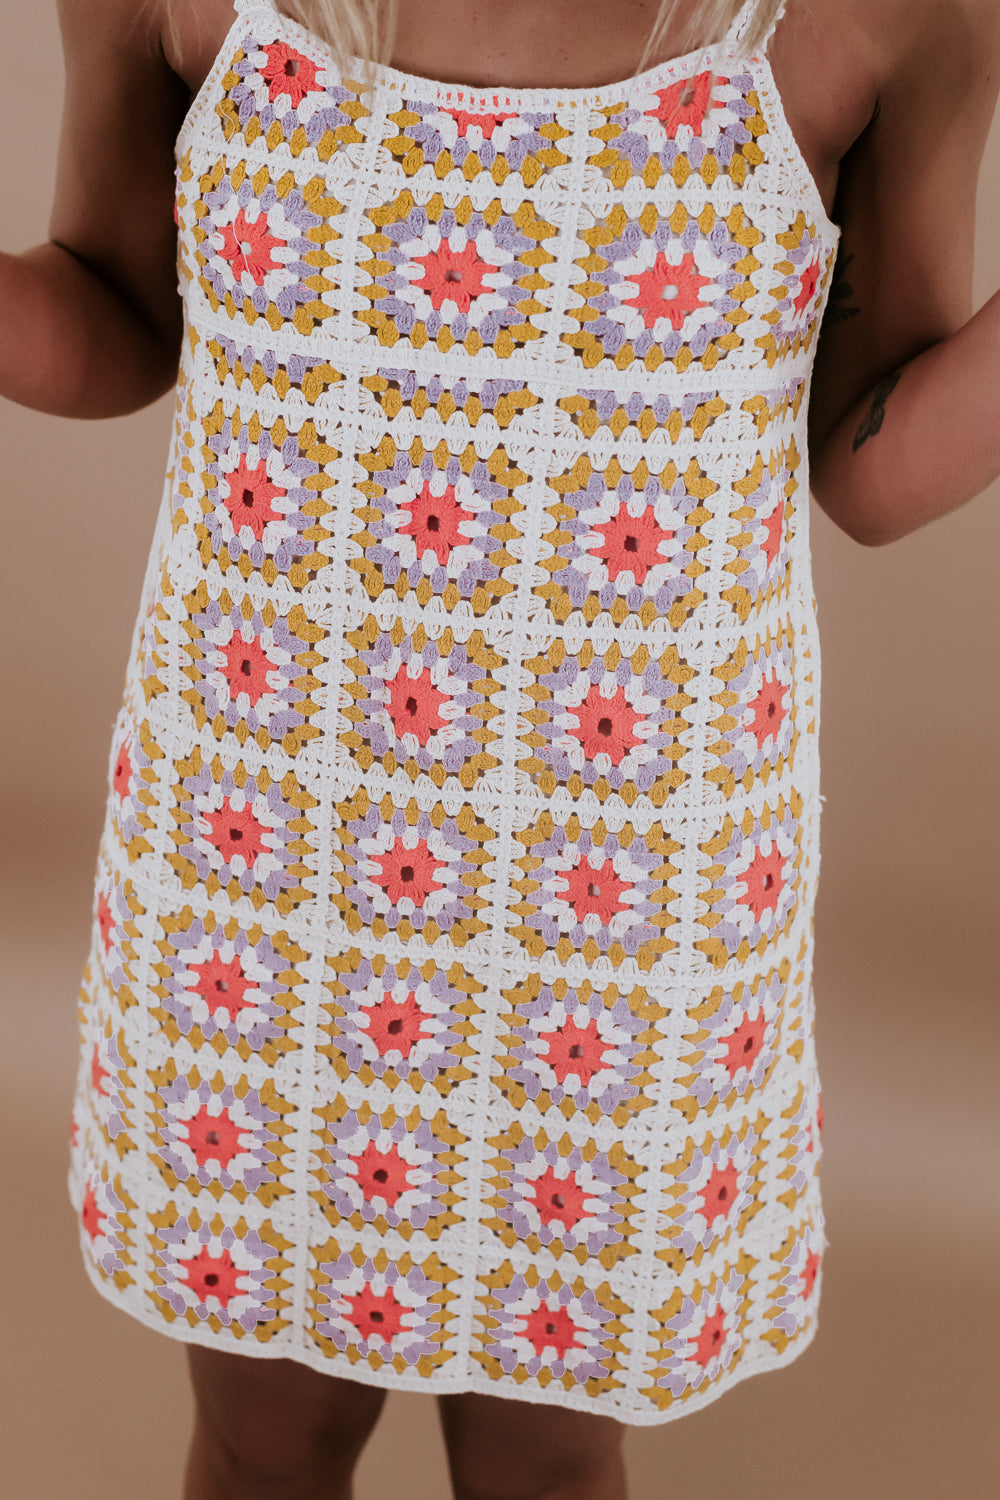 BY TOGETHER: Daydreamer Crochet Dress, Multi